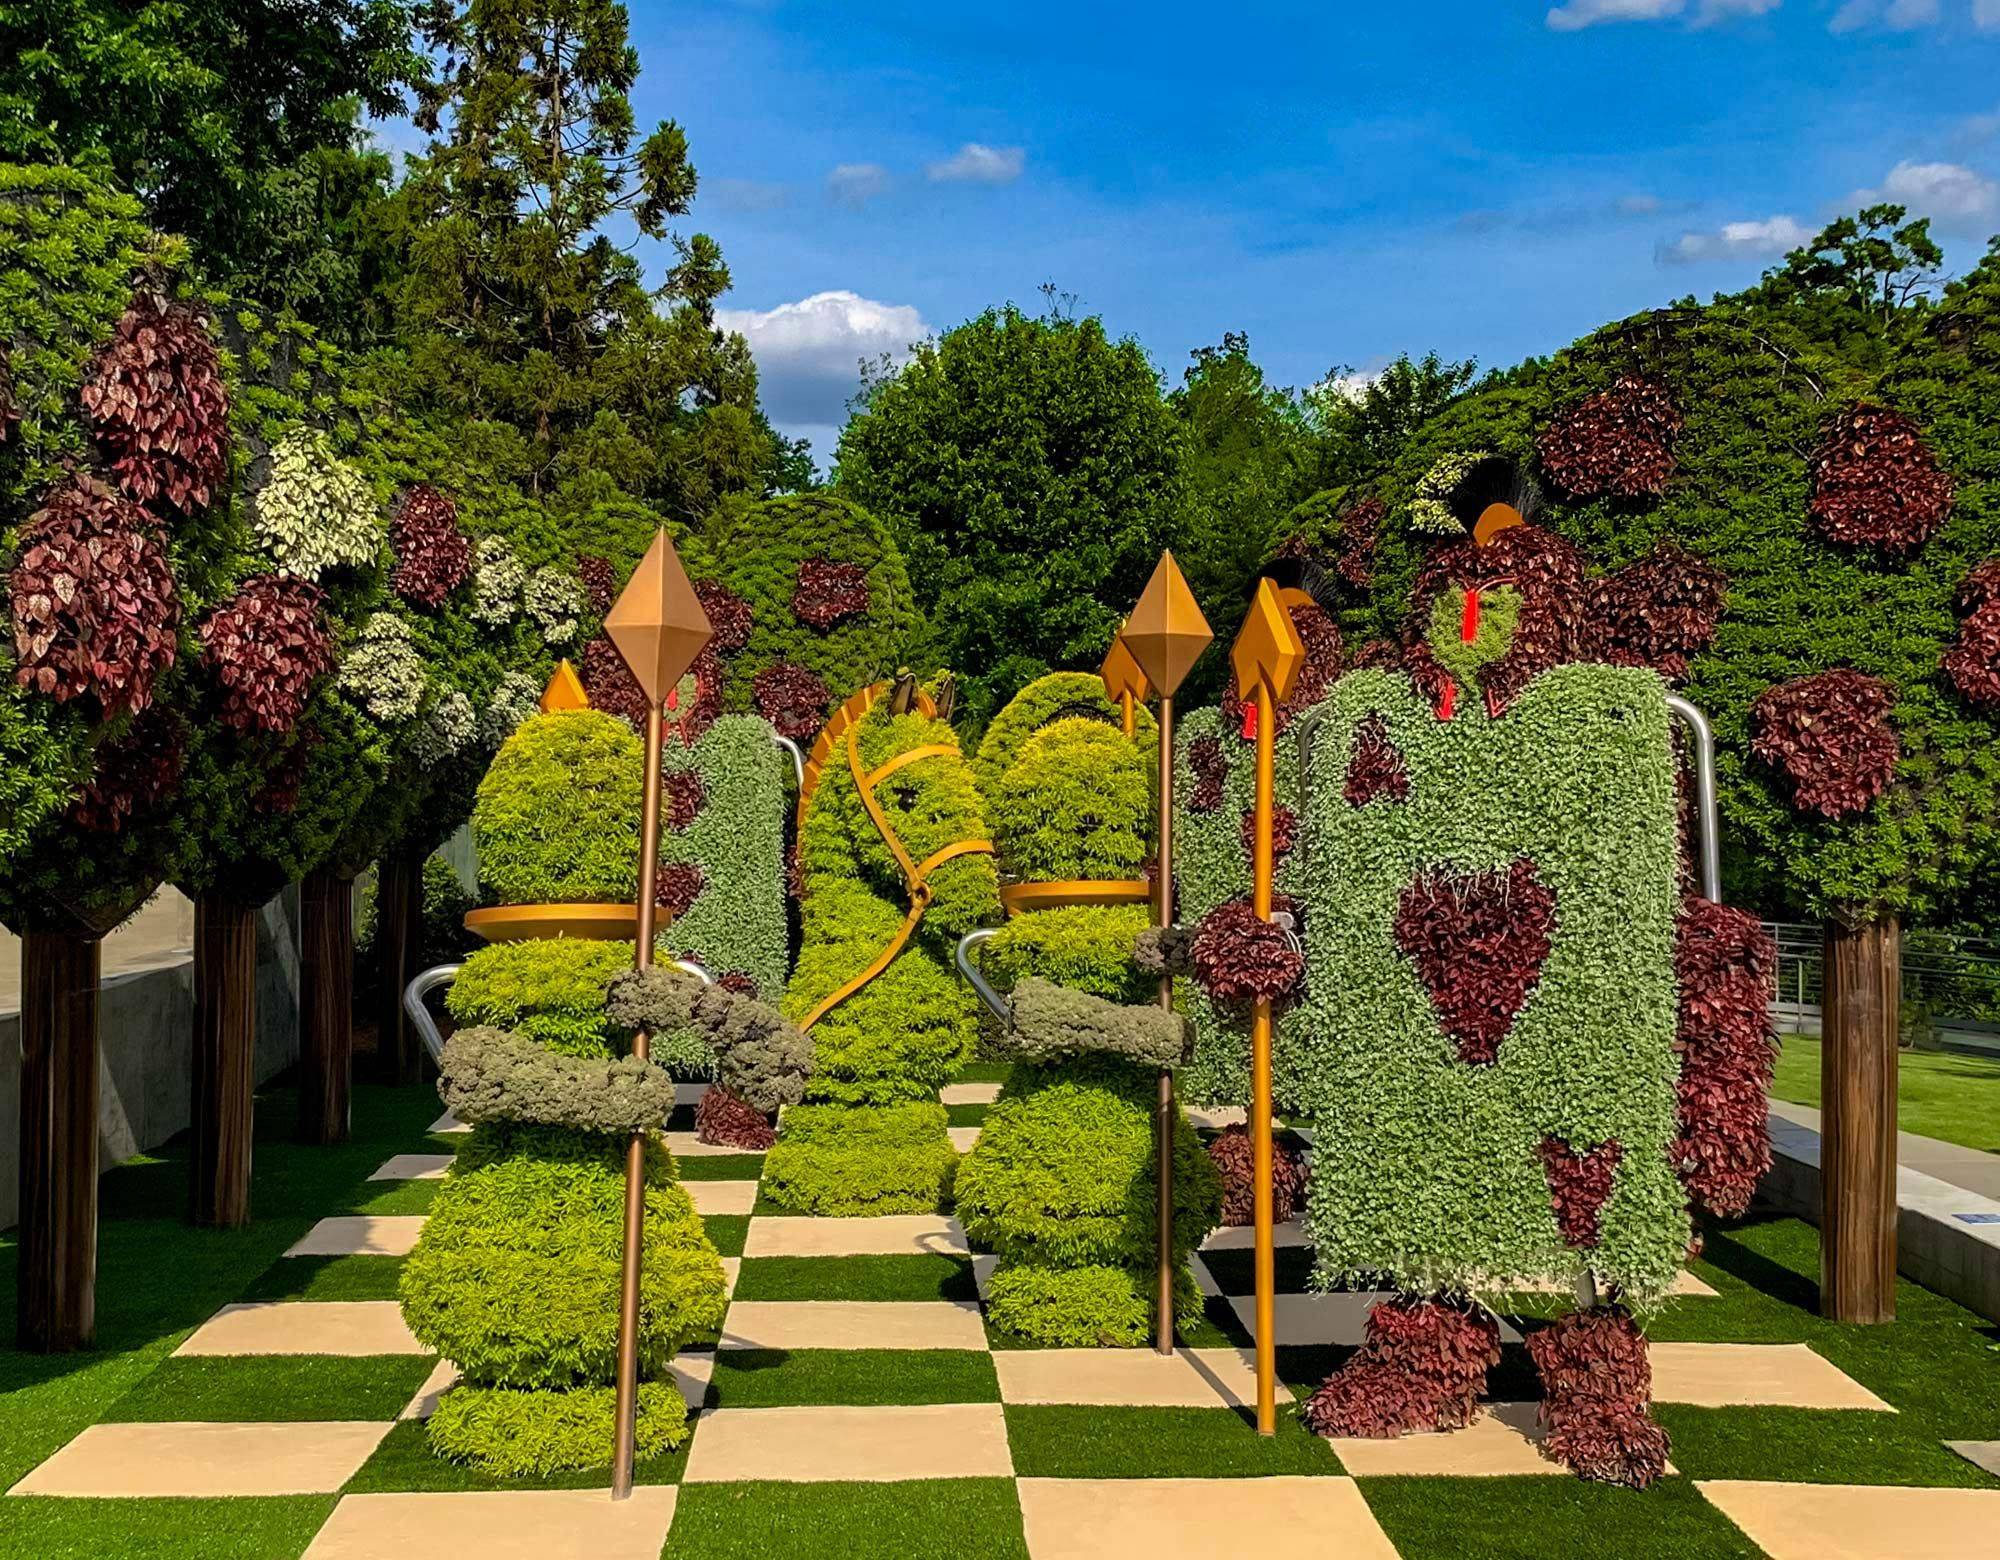 Chessboard Botanical Gardens